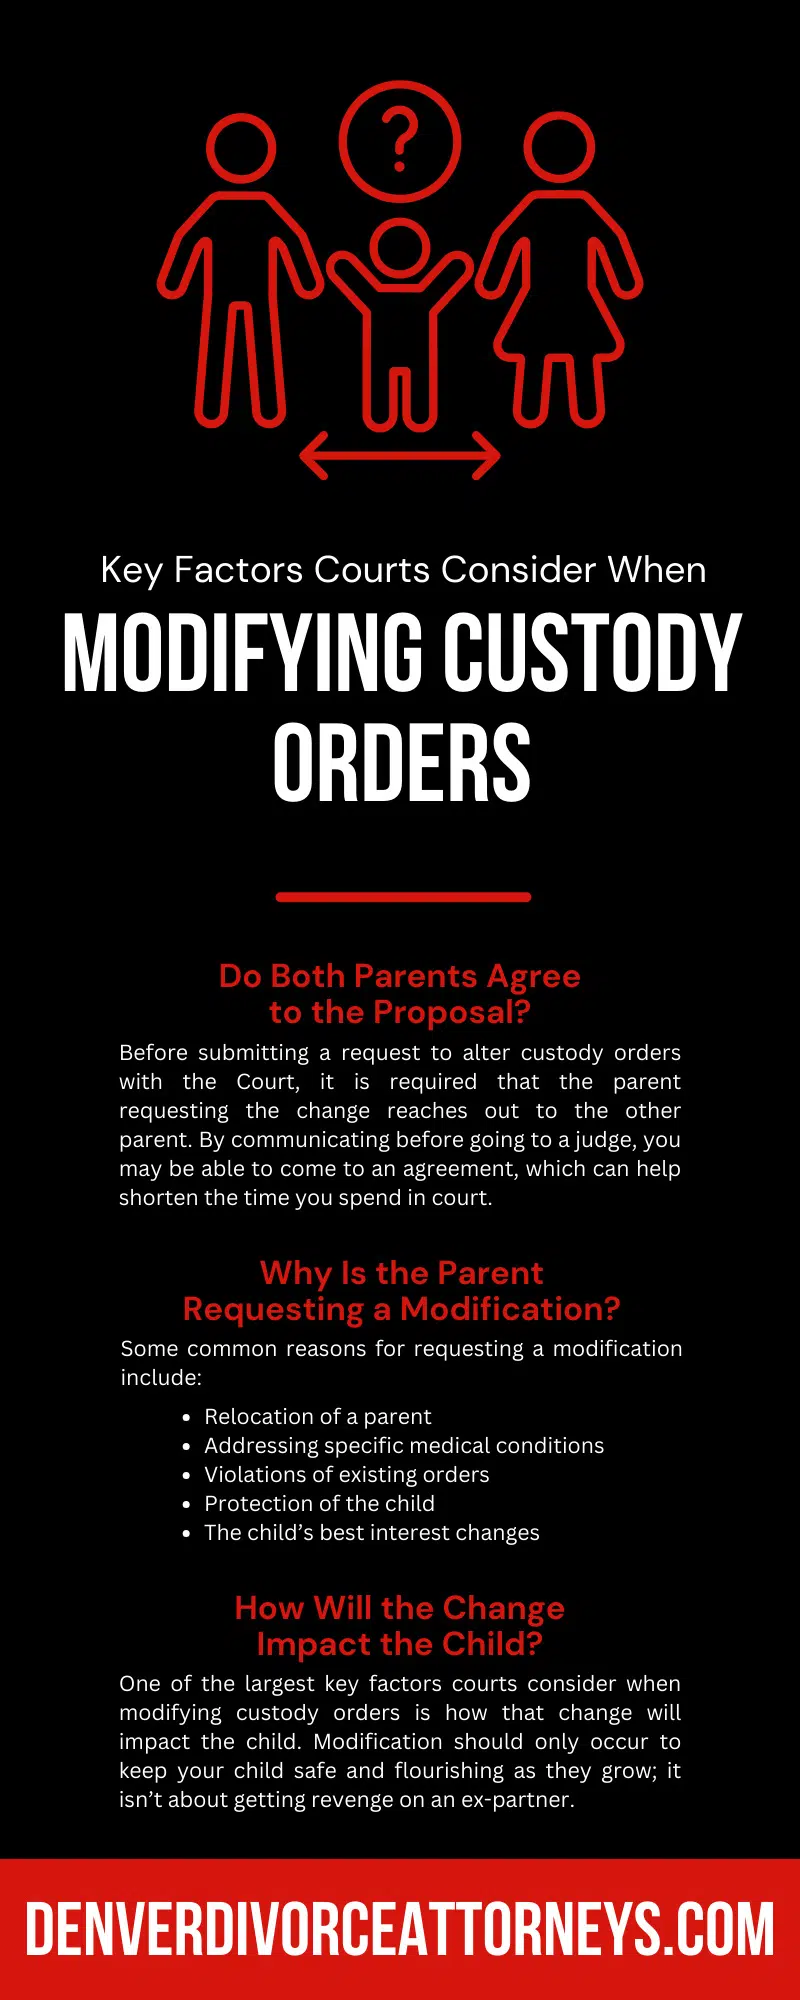 Key Factors Courts Consider When Modifying Custody Orders
